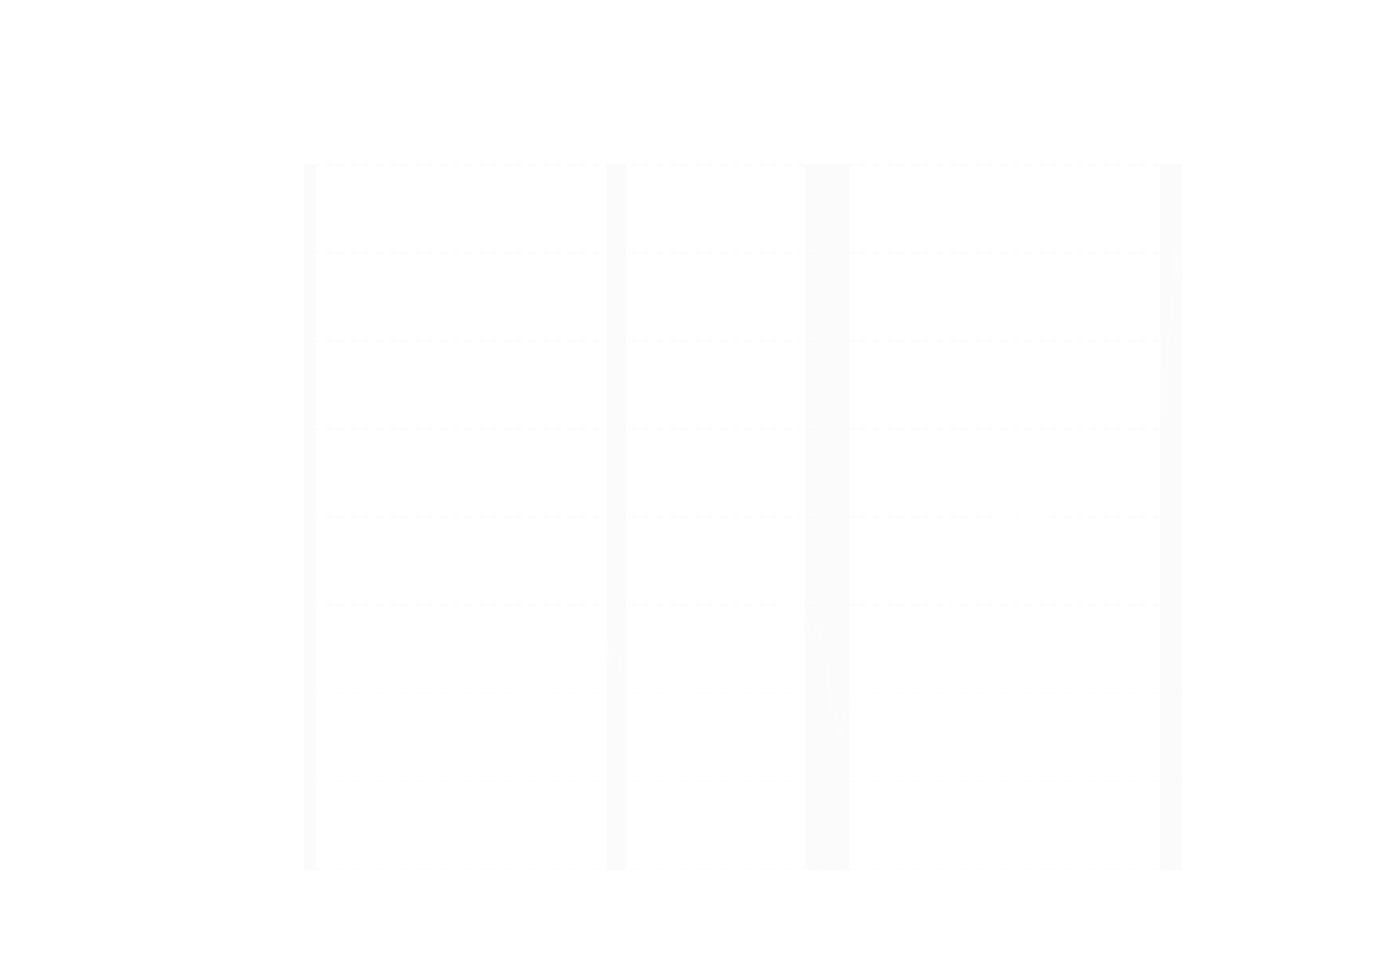 S&P 500 Index graph